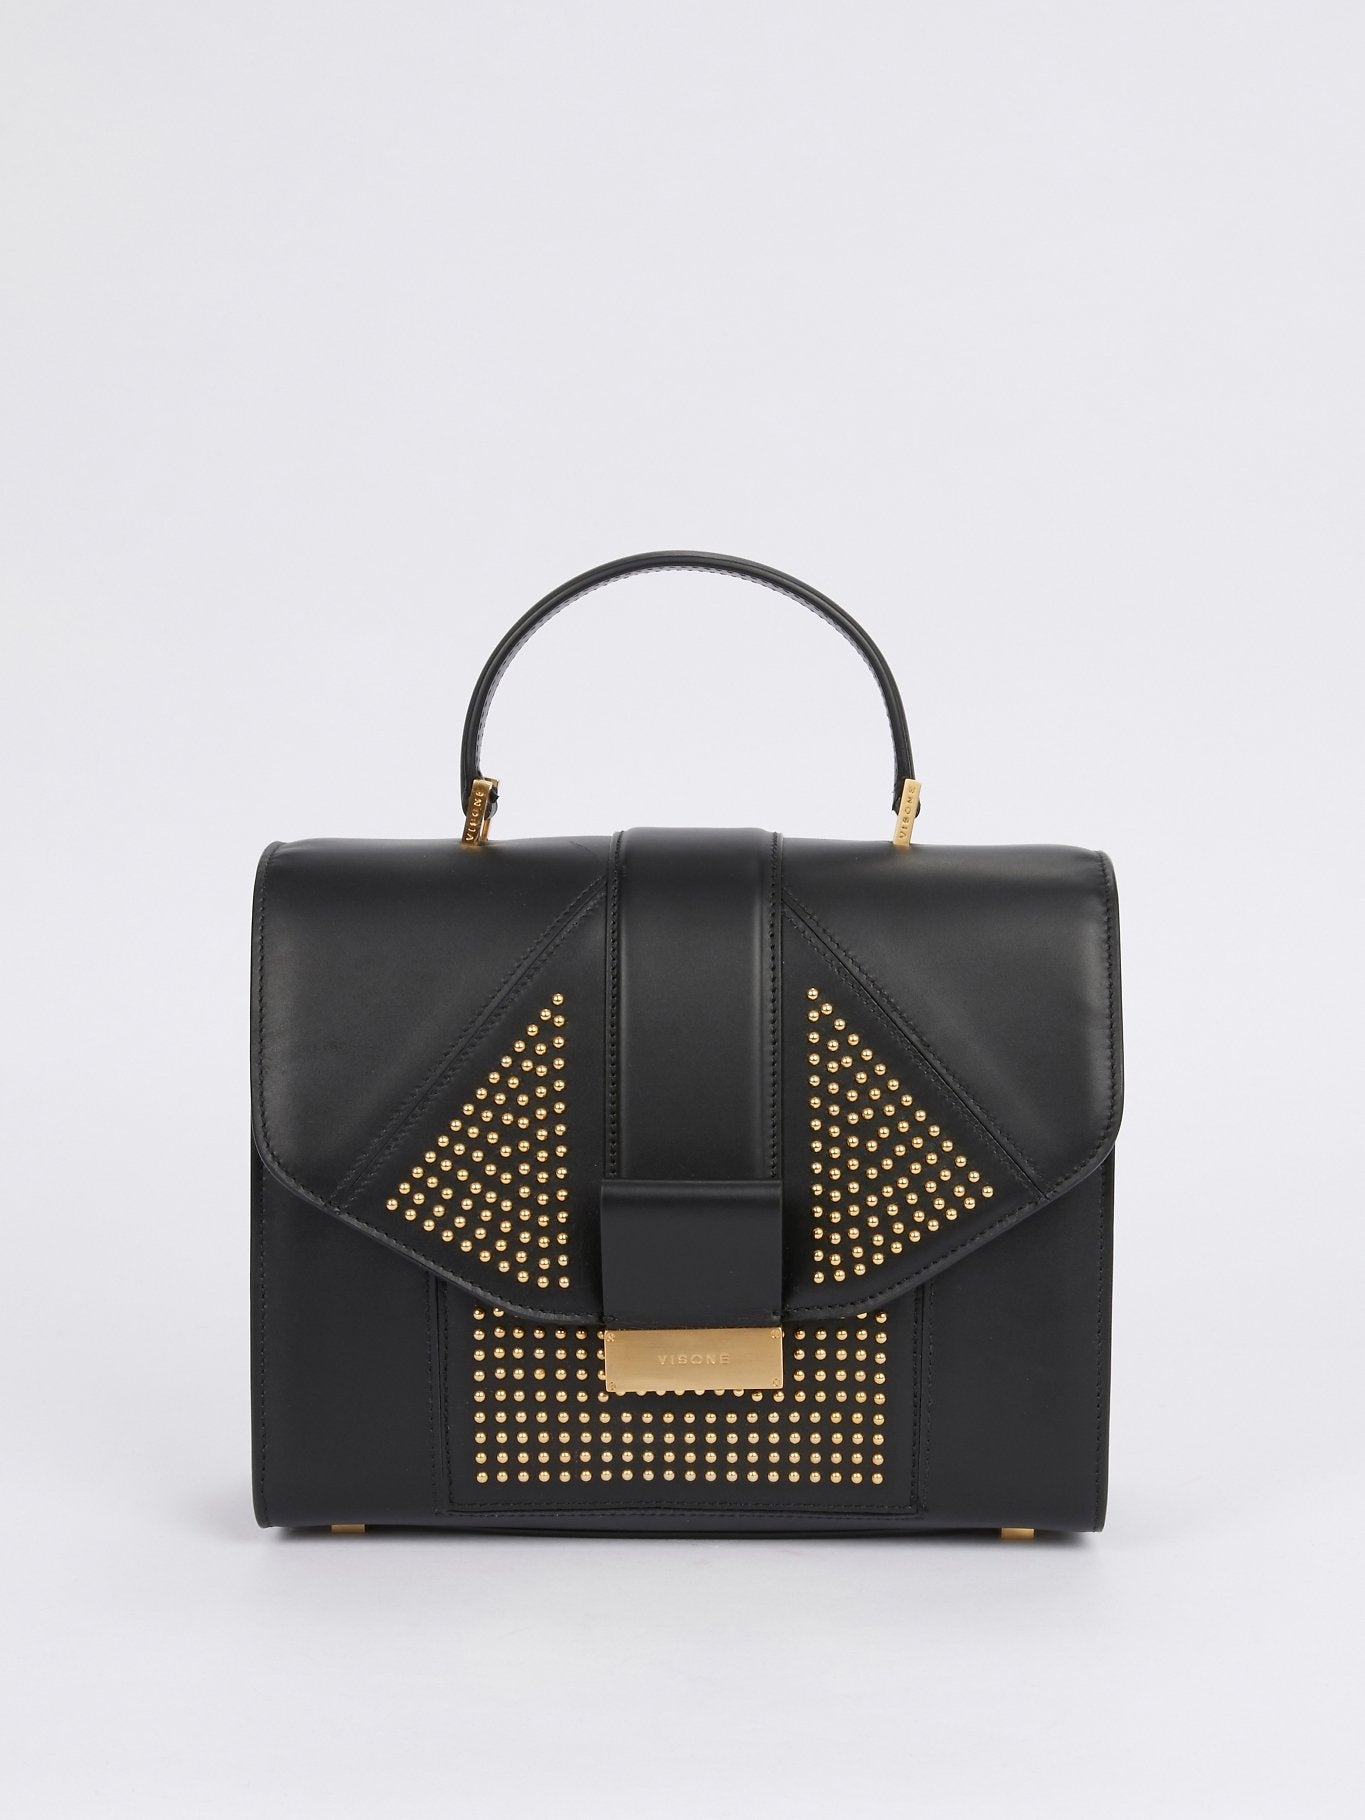 Angie Black Geometric Studded Leather Handbag